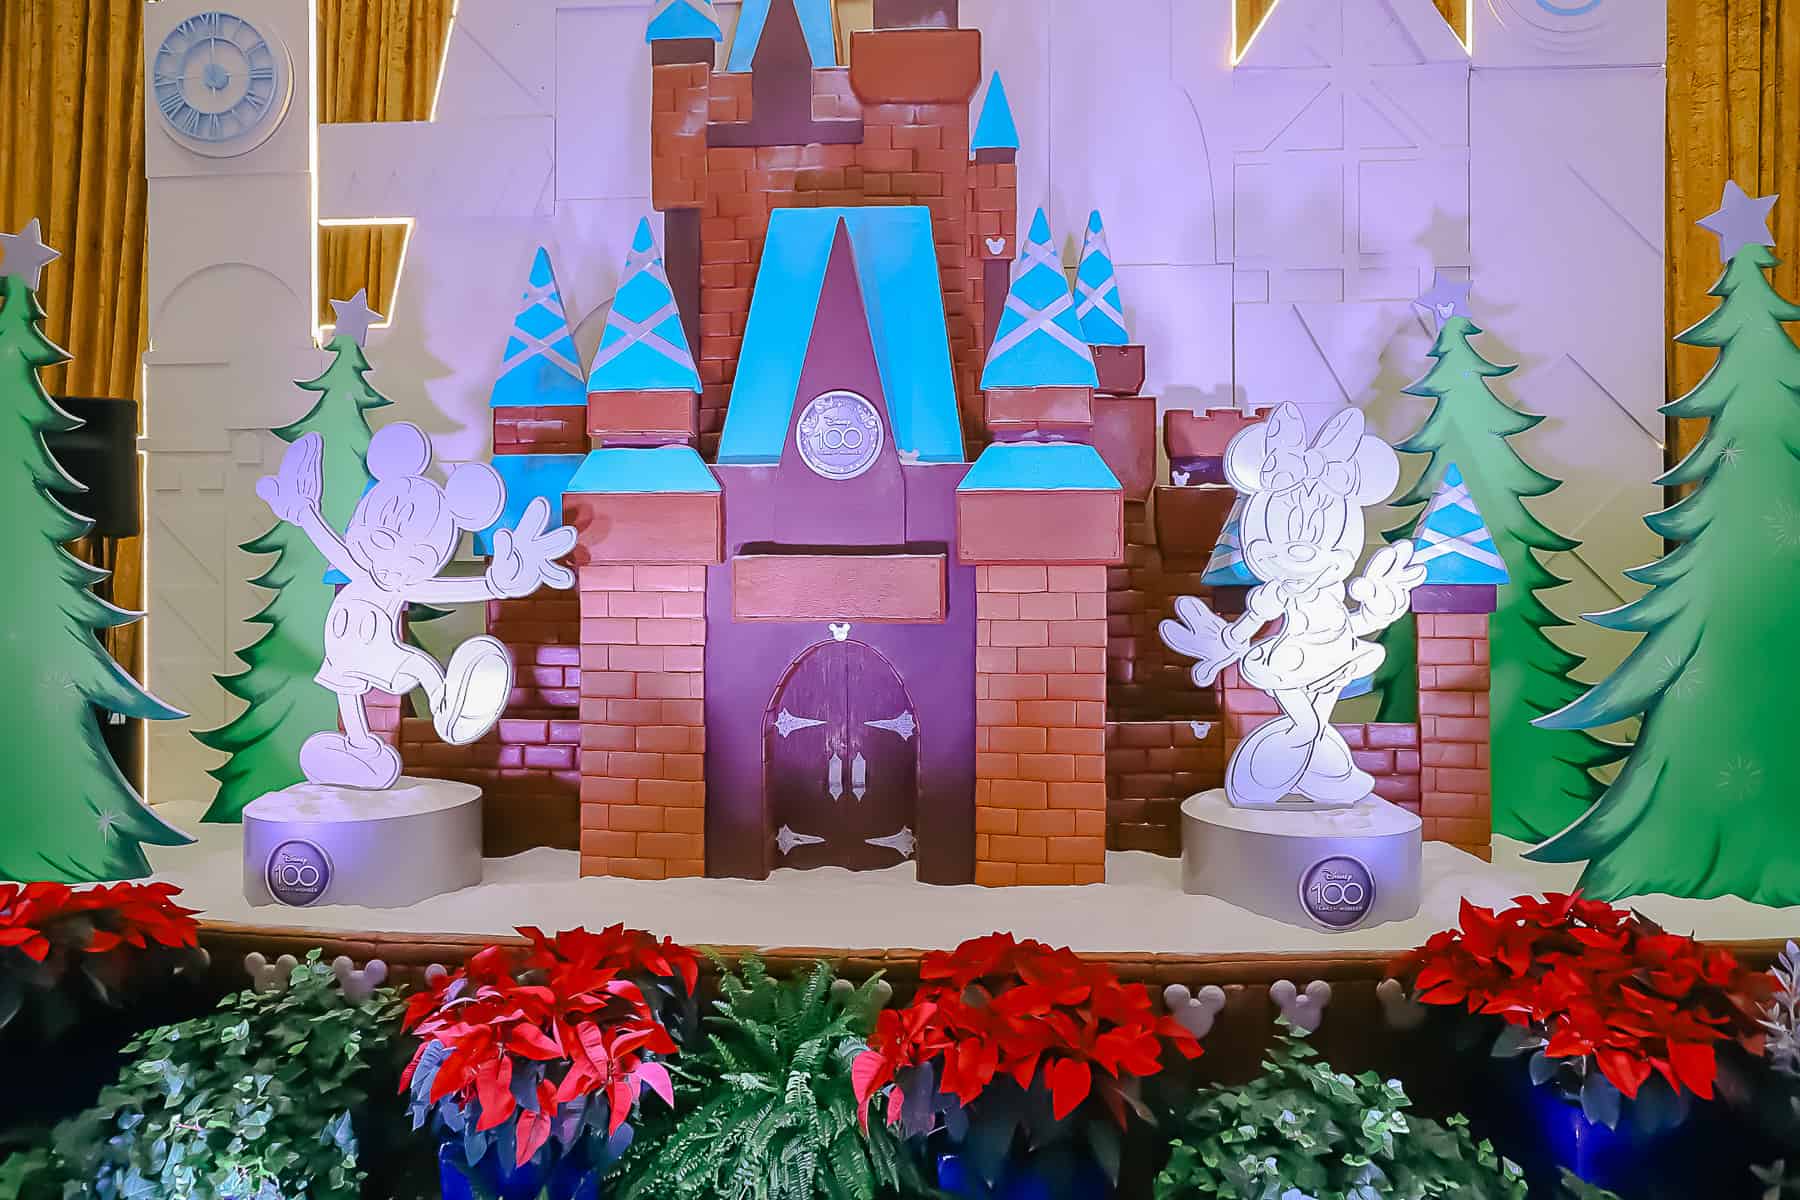 Disney100 Gingerbread Display at Disney's Contemporary Resort in 2023